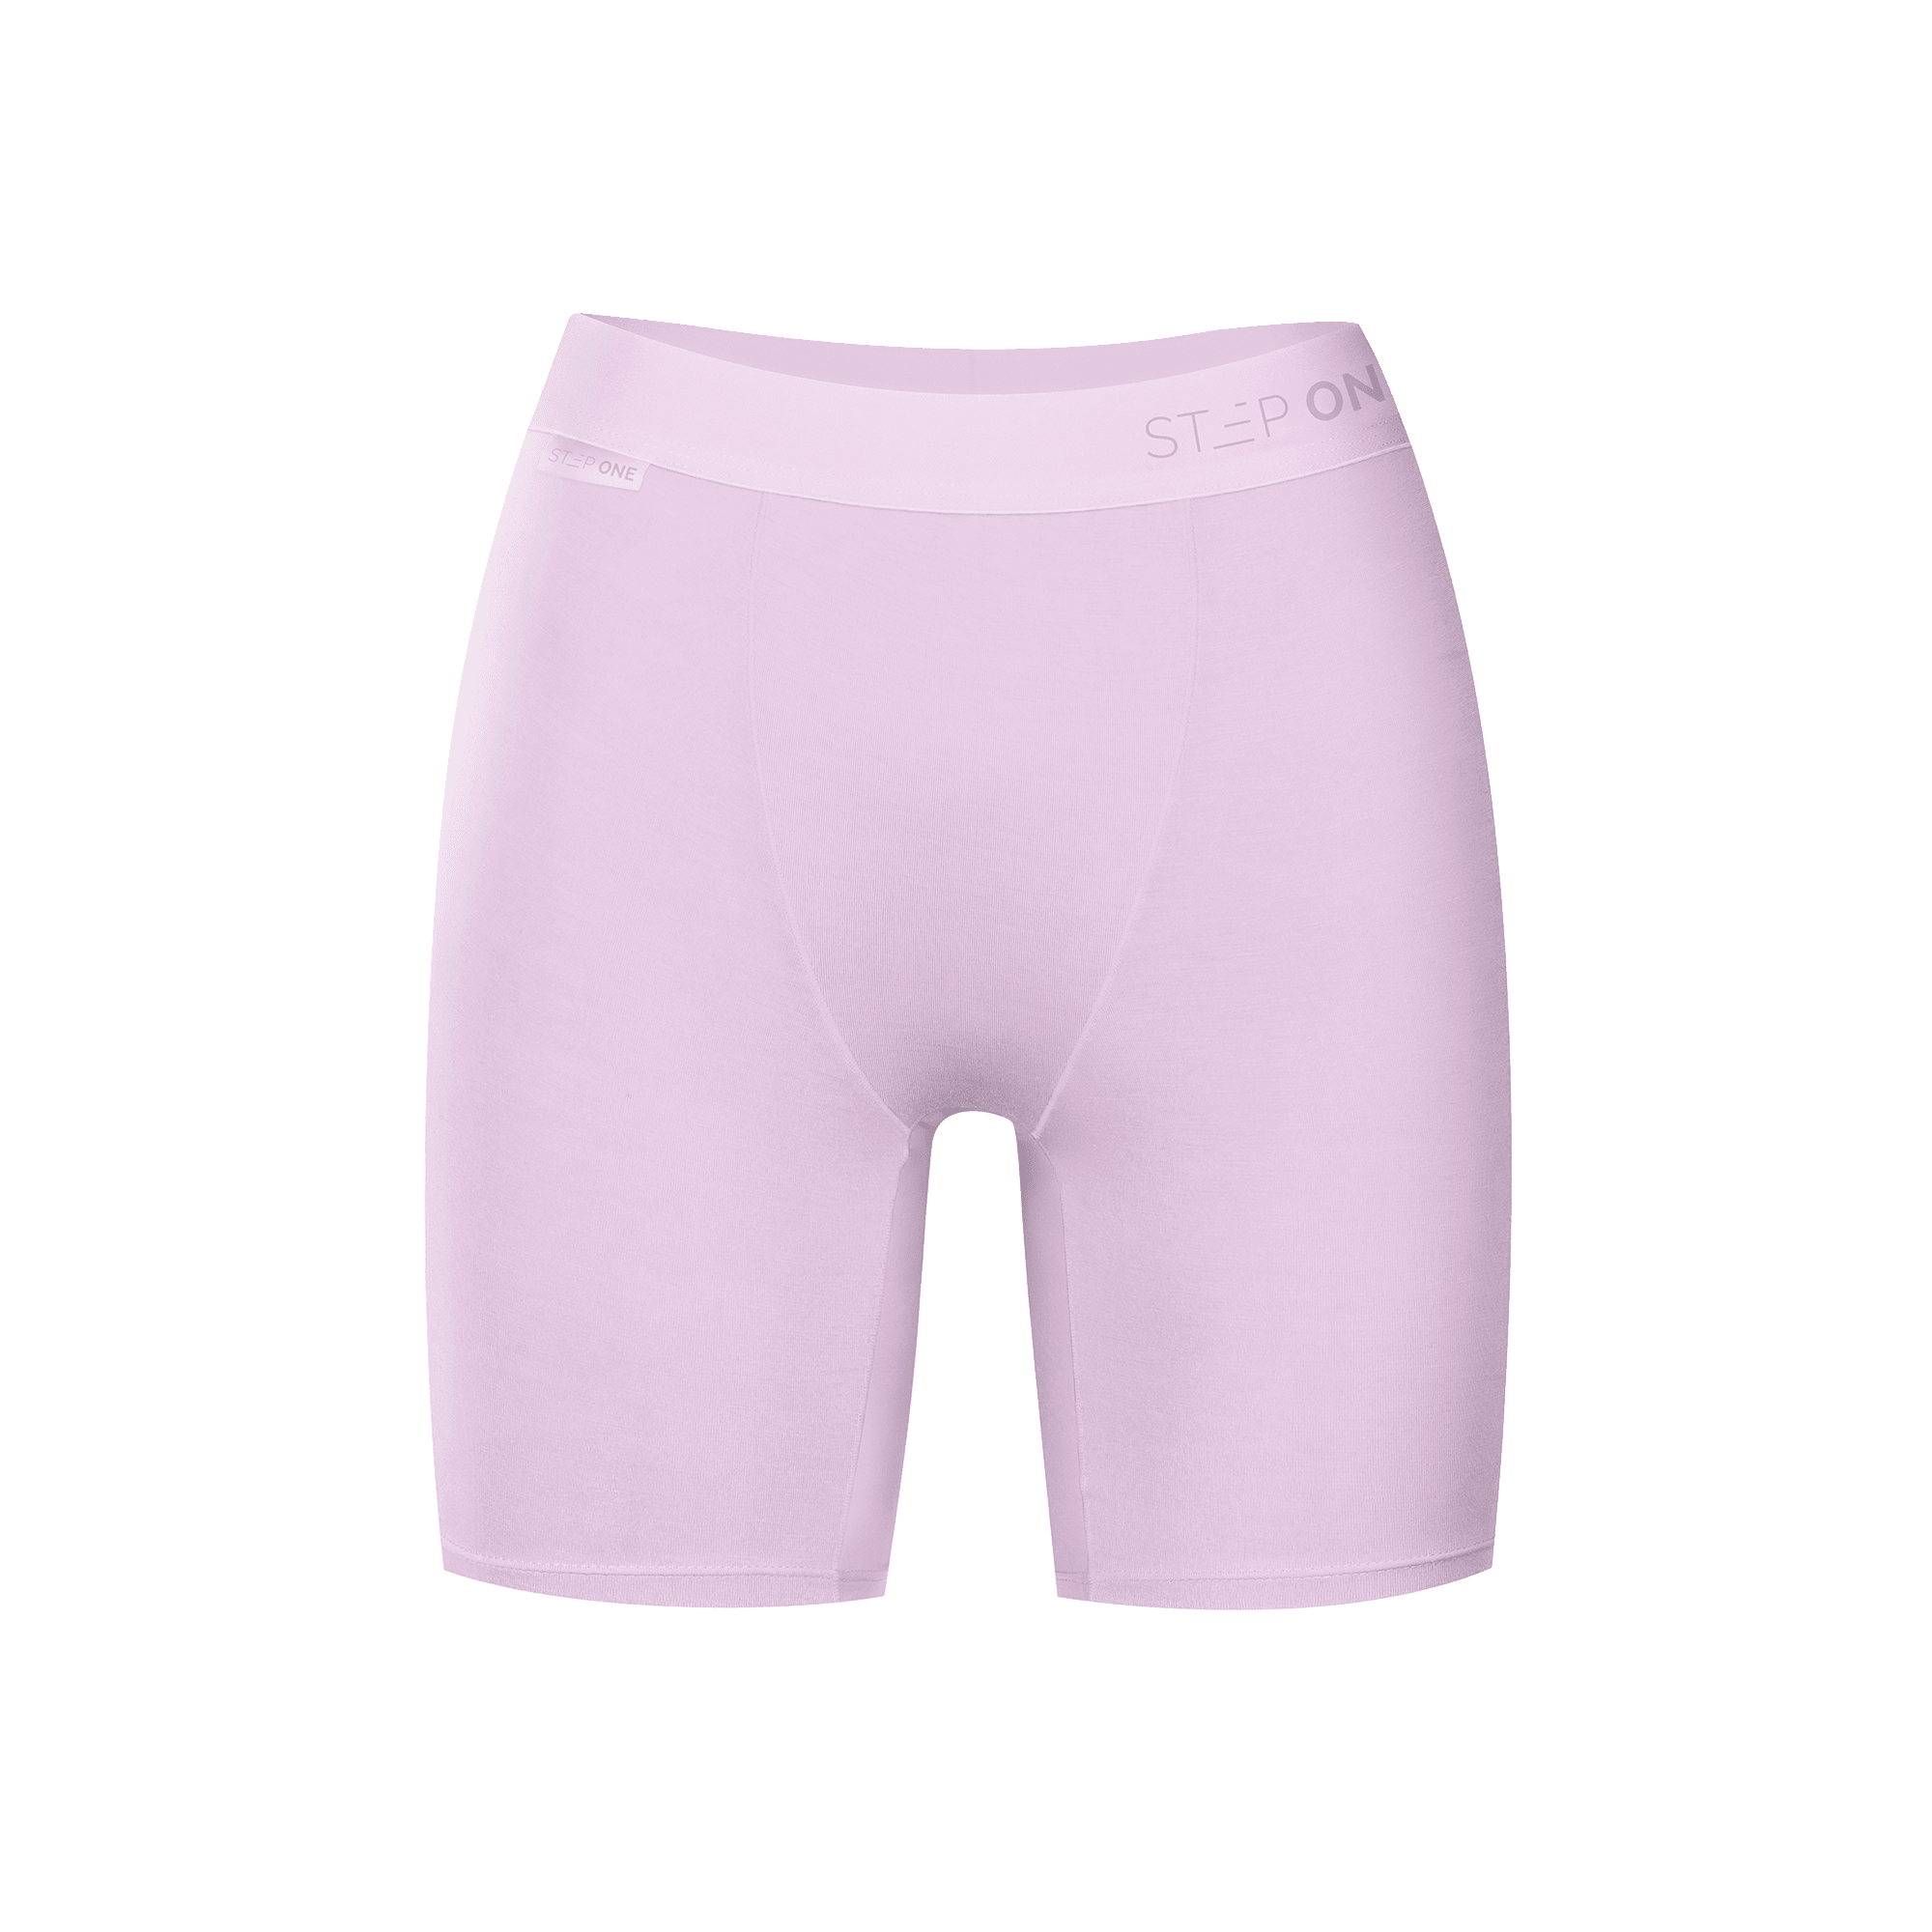 Women's Body Shorts - Lilac Snow